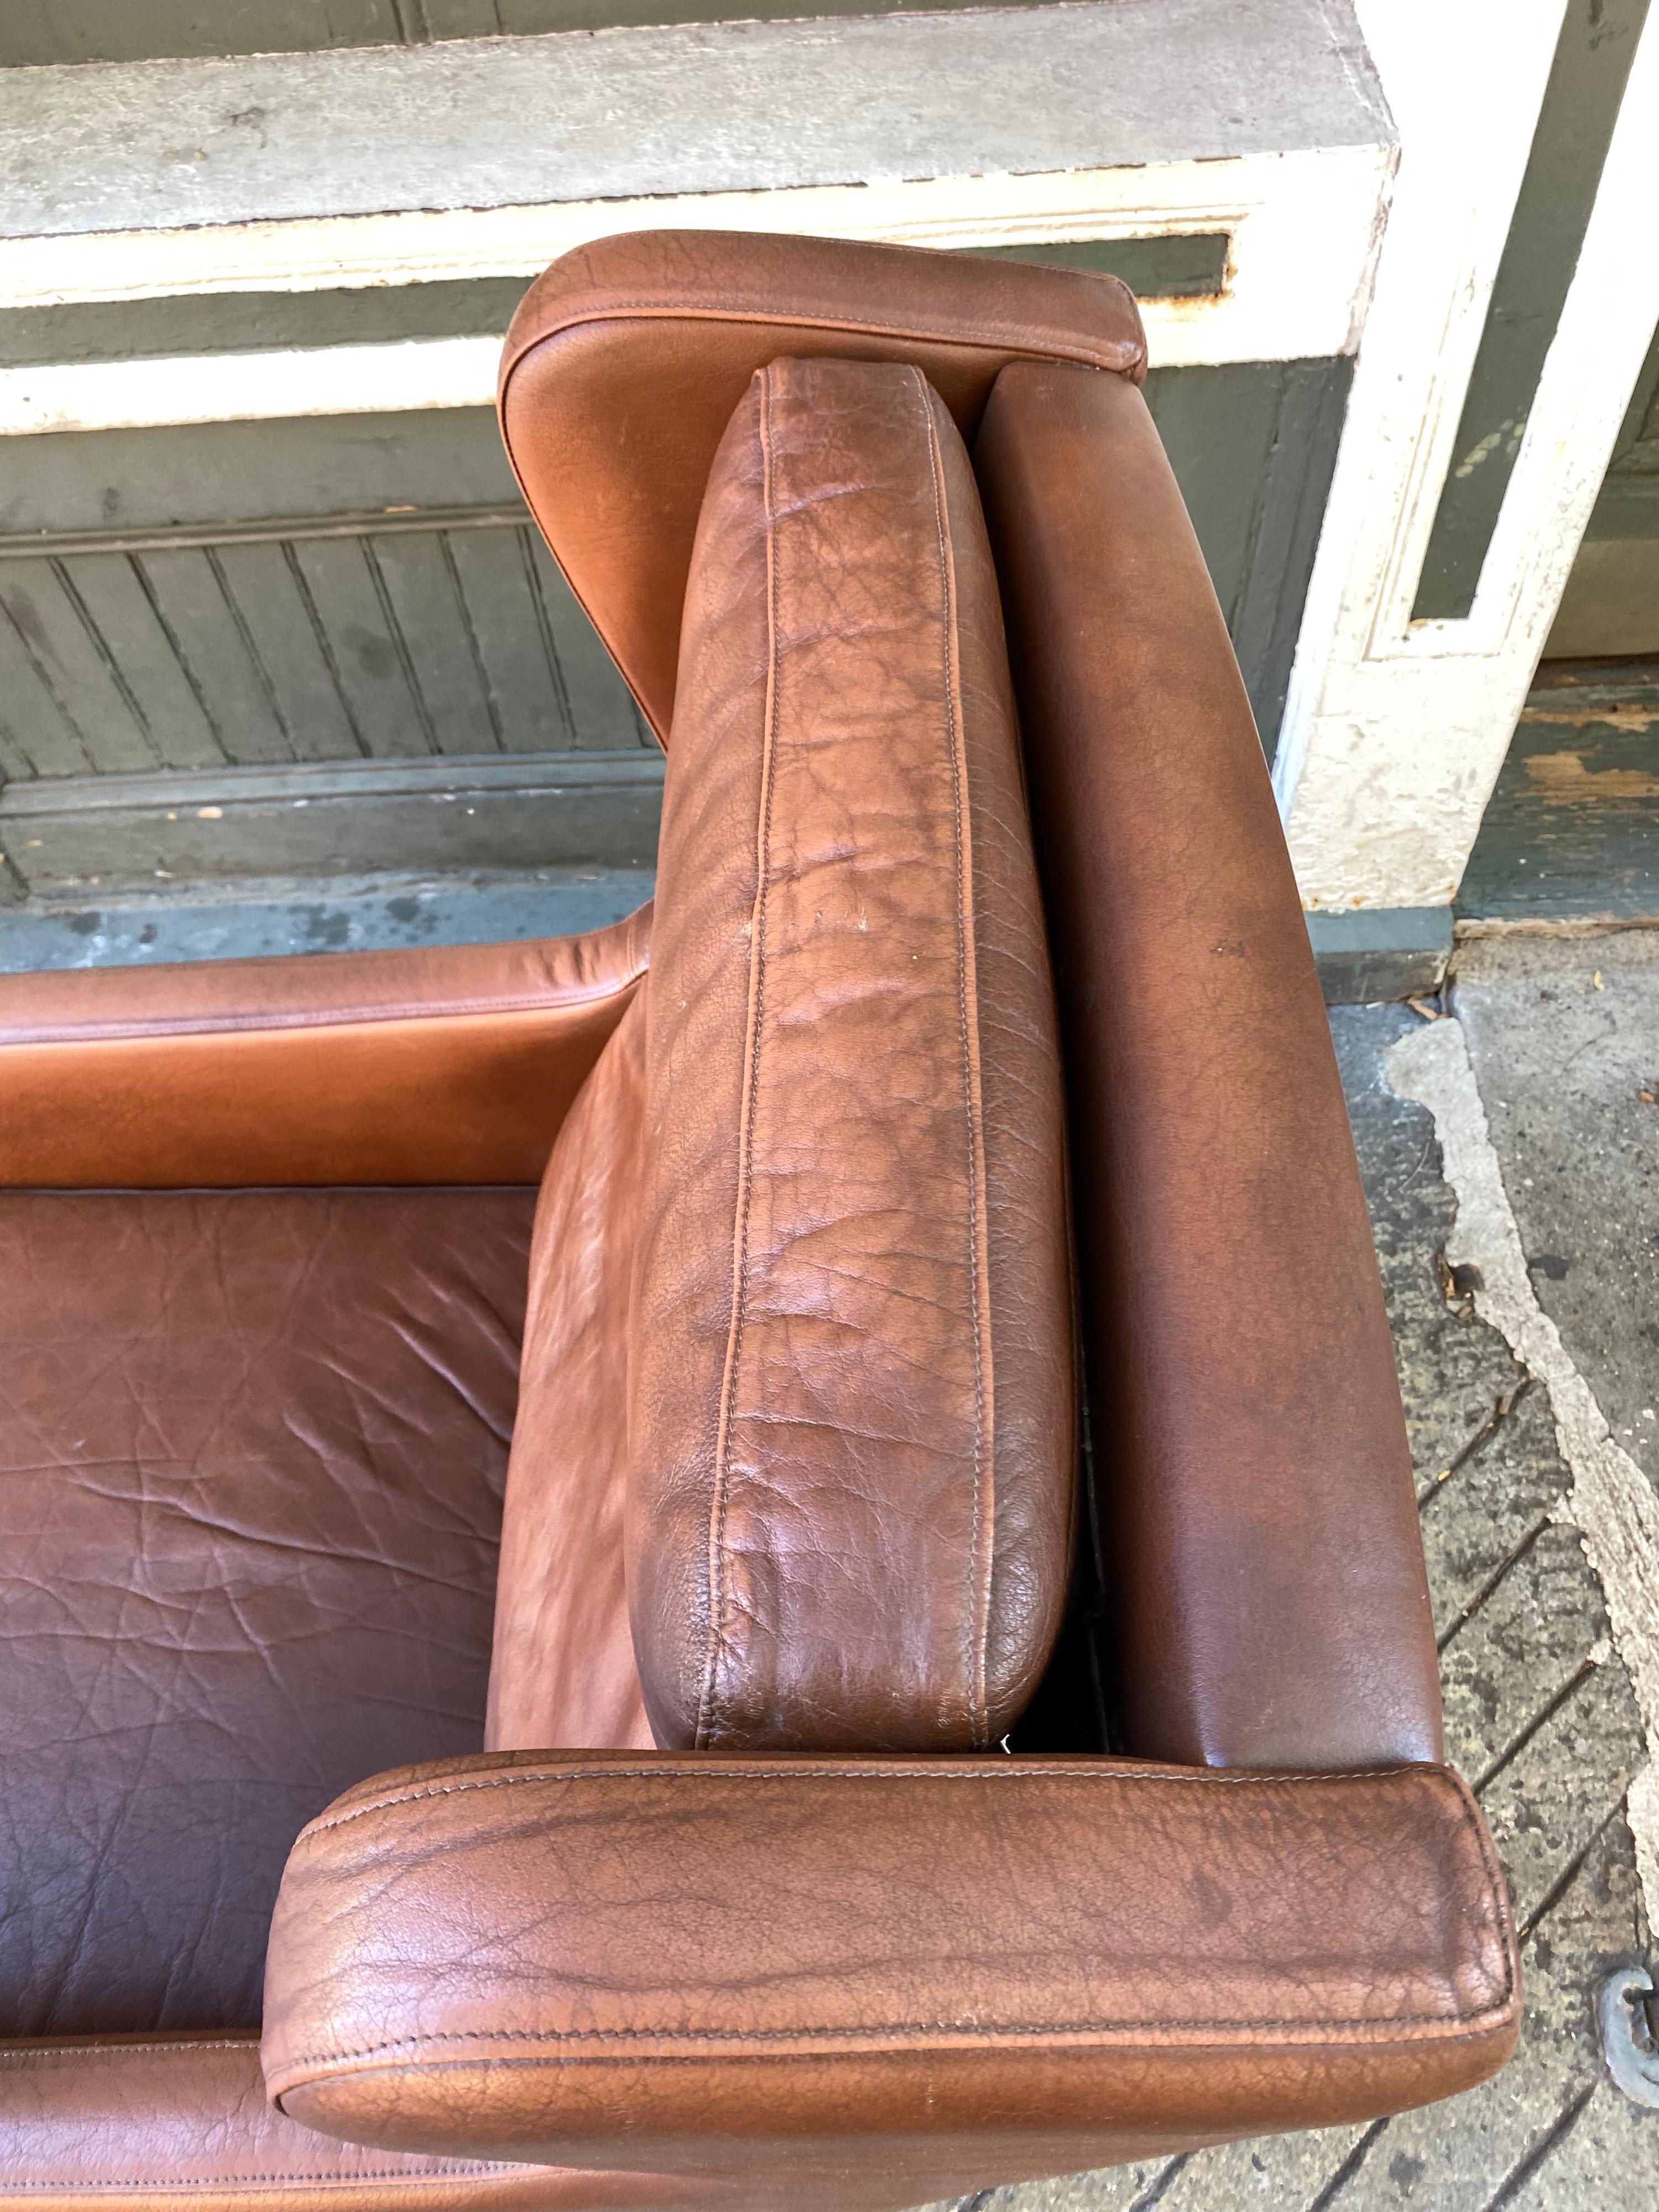 Borge Mogensen Leather Lounge Chair 1